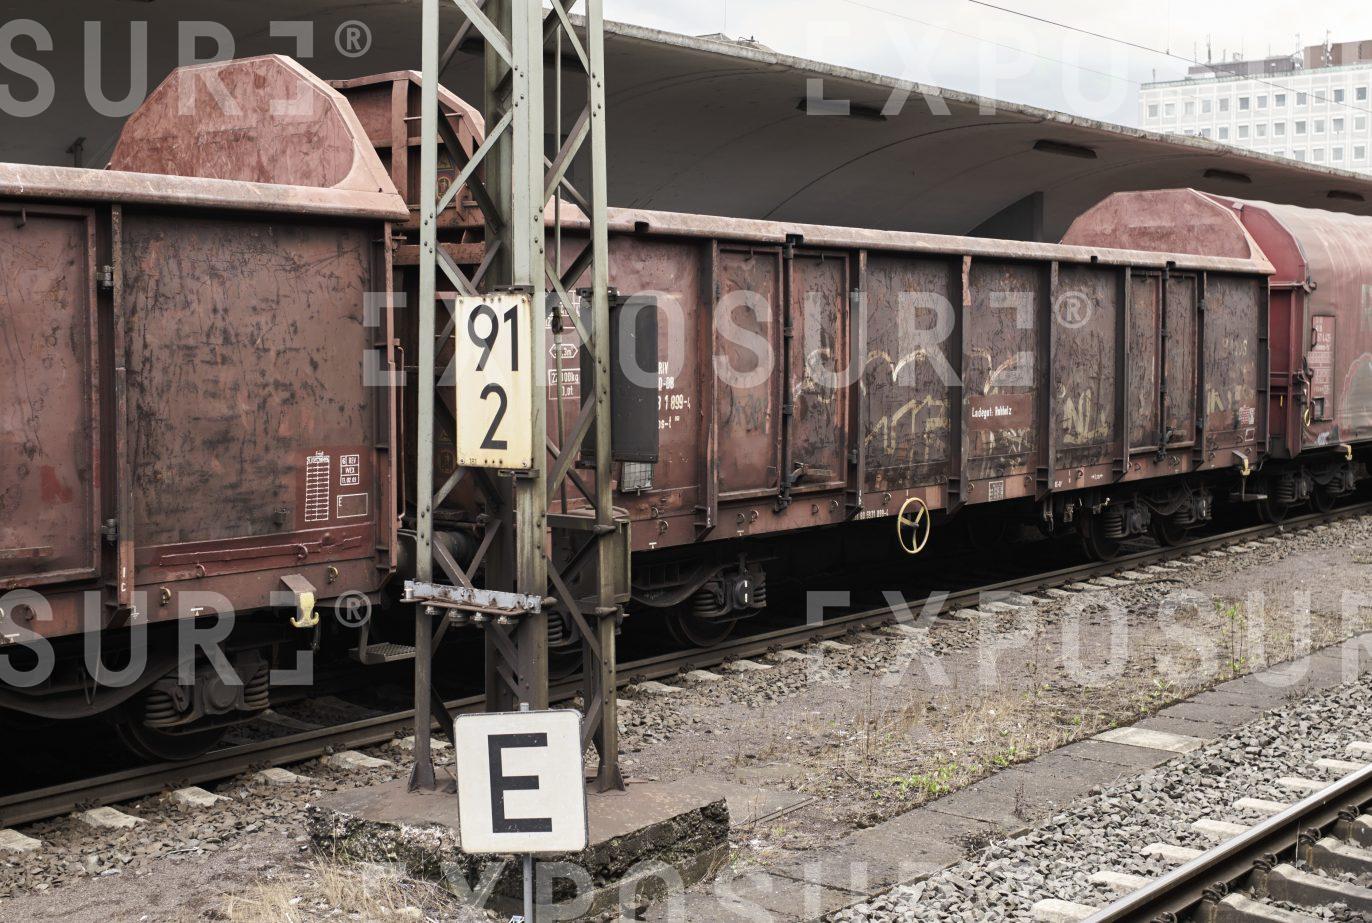 Railway wagons in Koblenz station